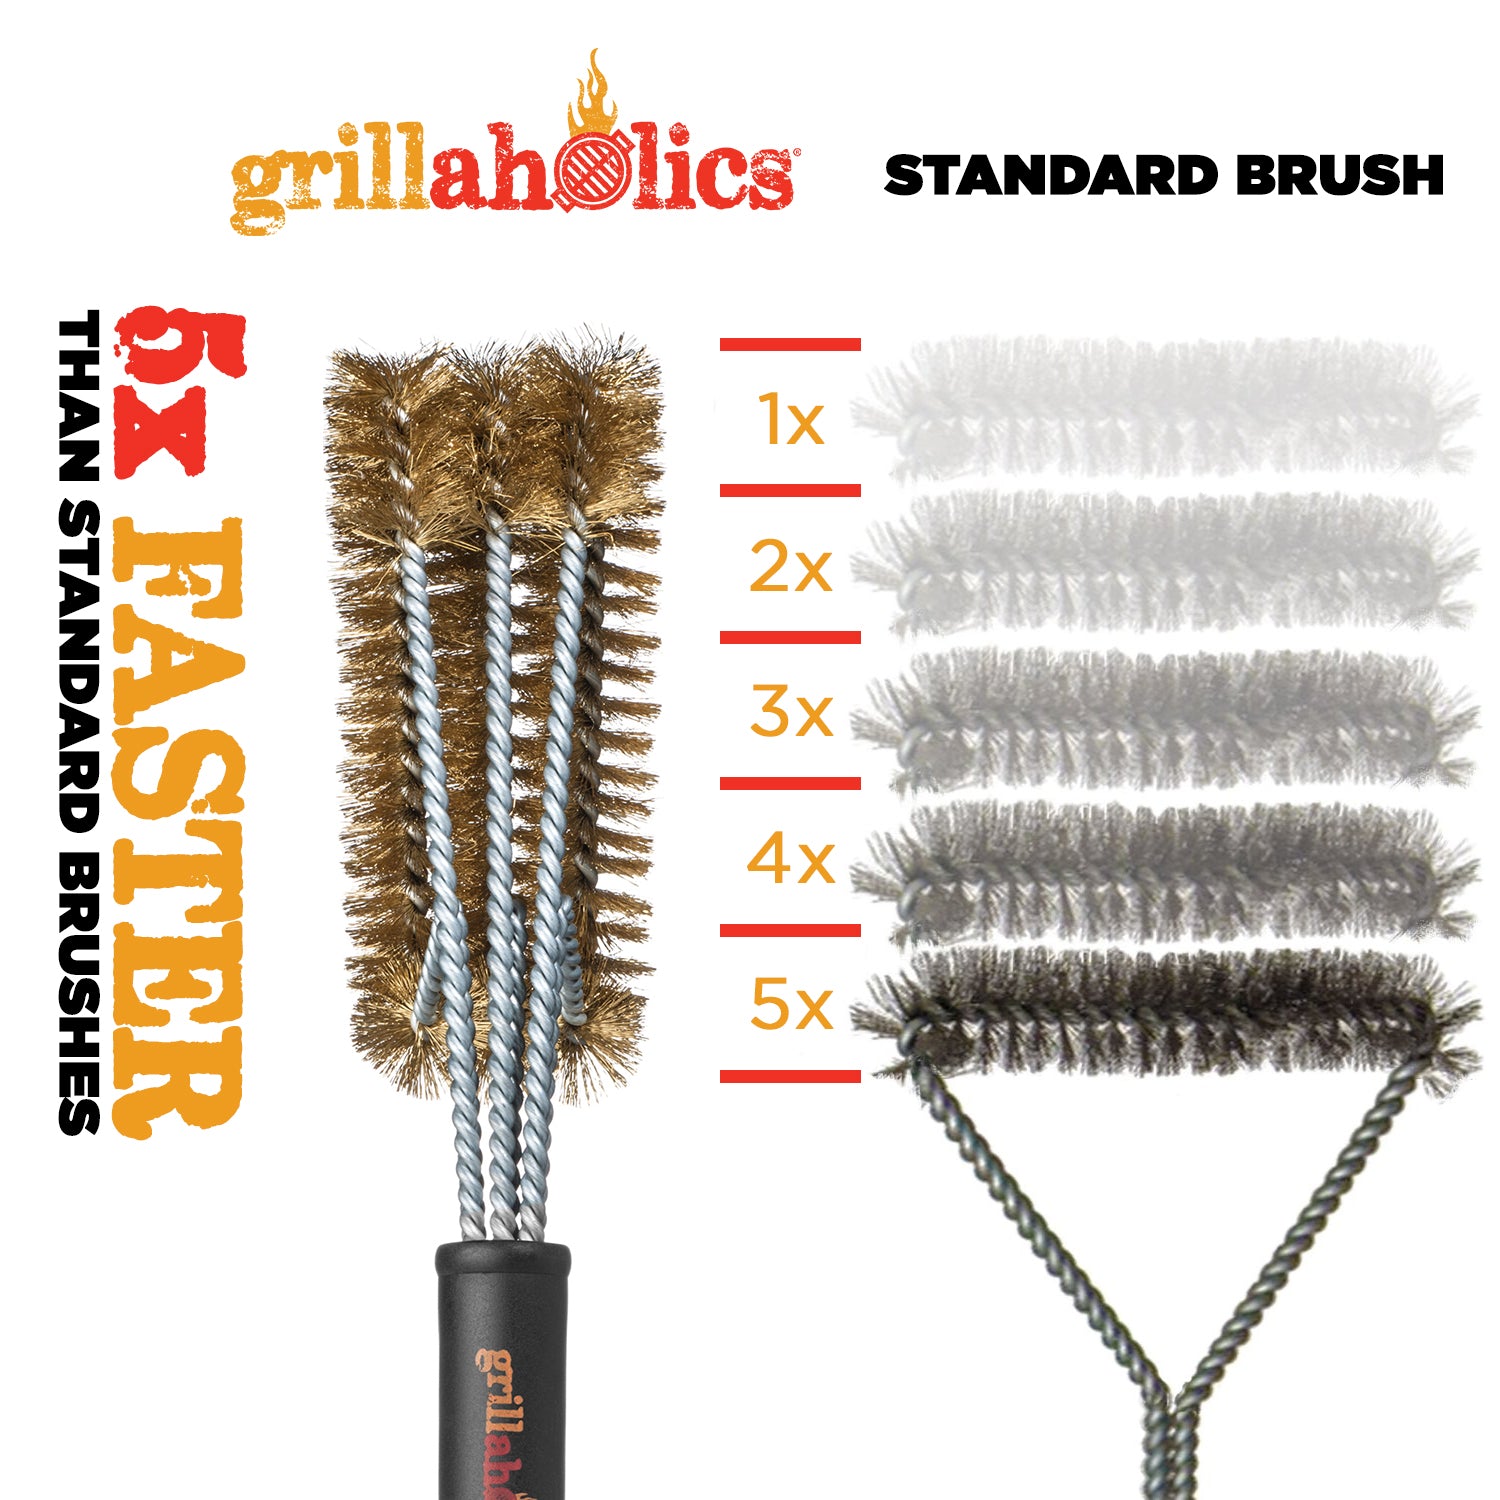 Grill Brush-Brass Brush